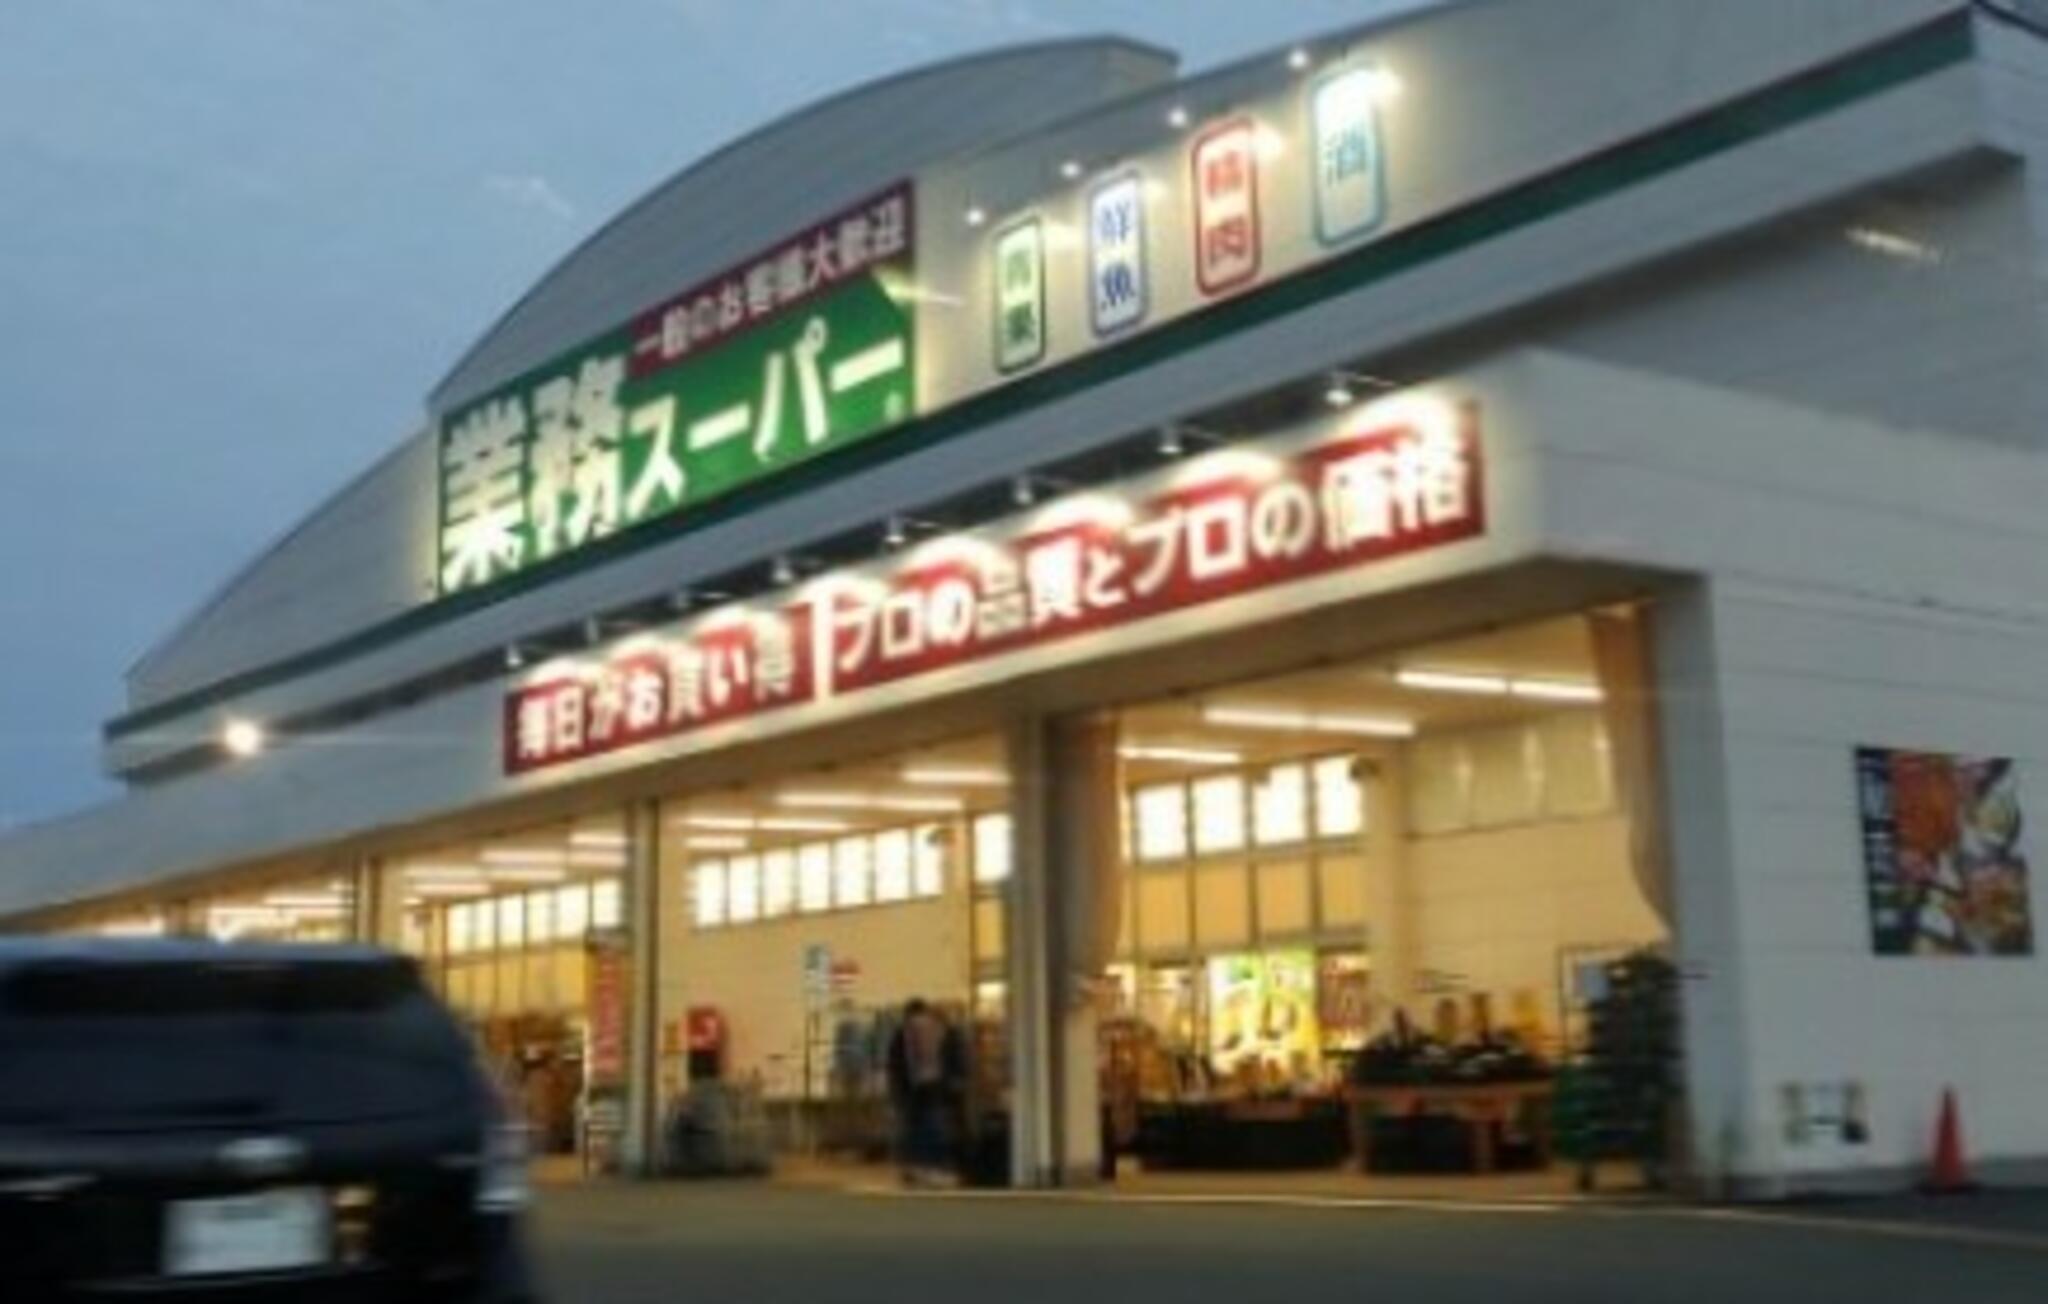 業務スーパー 宮崎大塚店の代表写真8